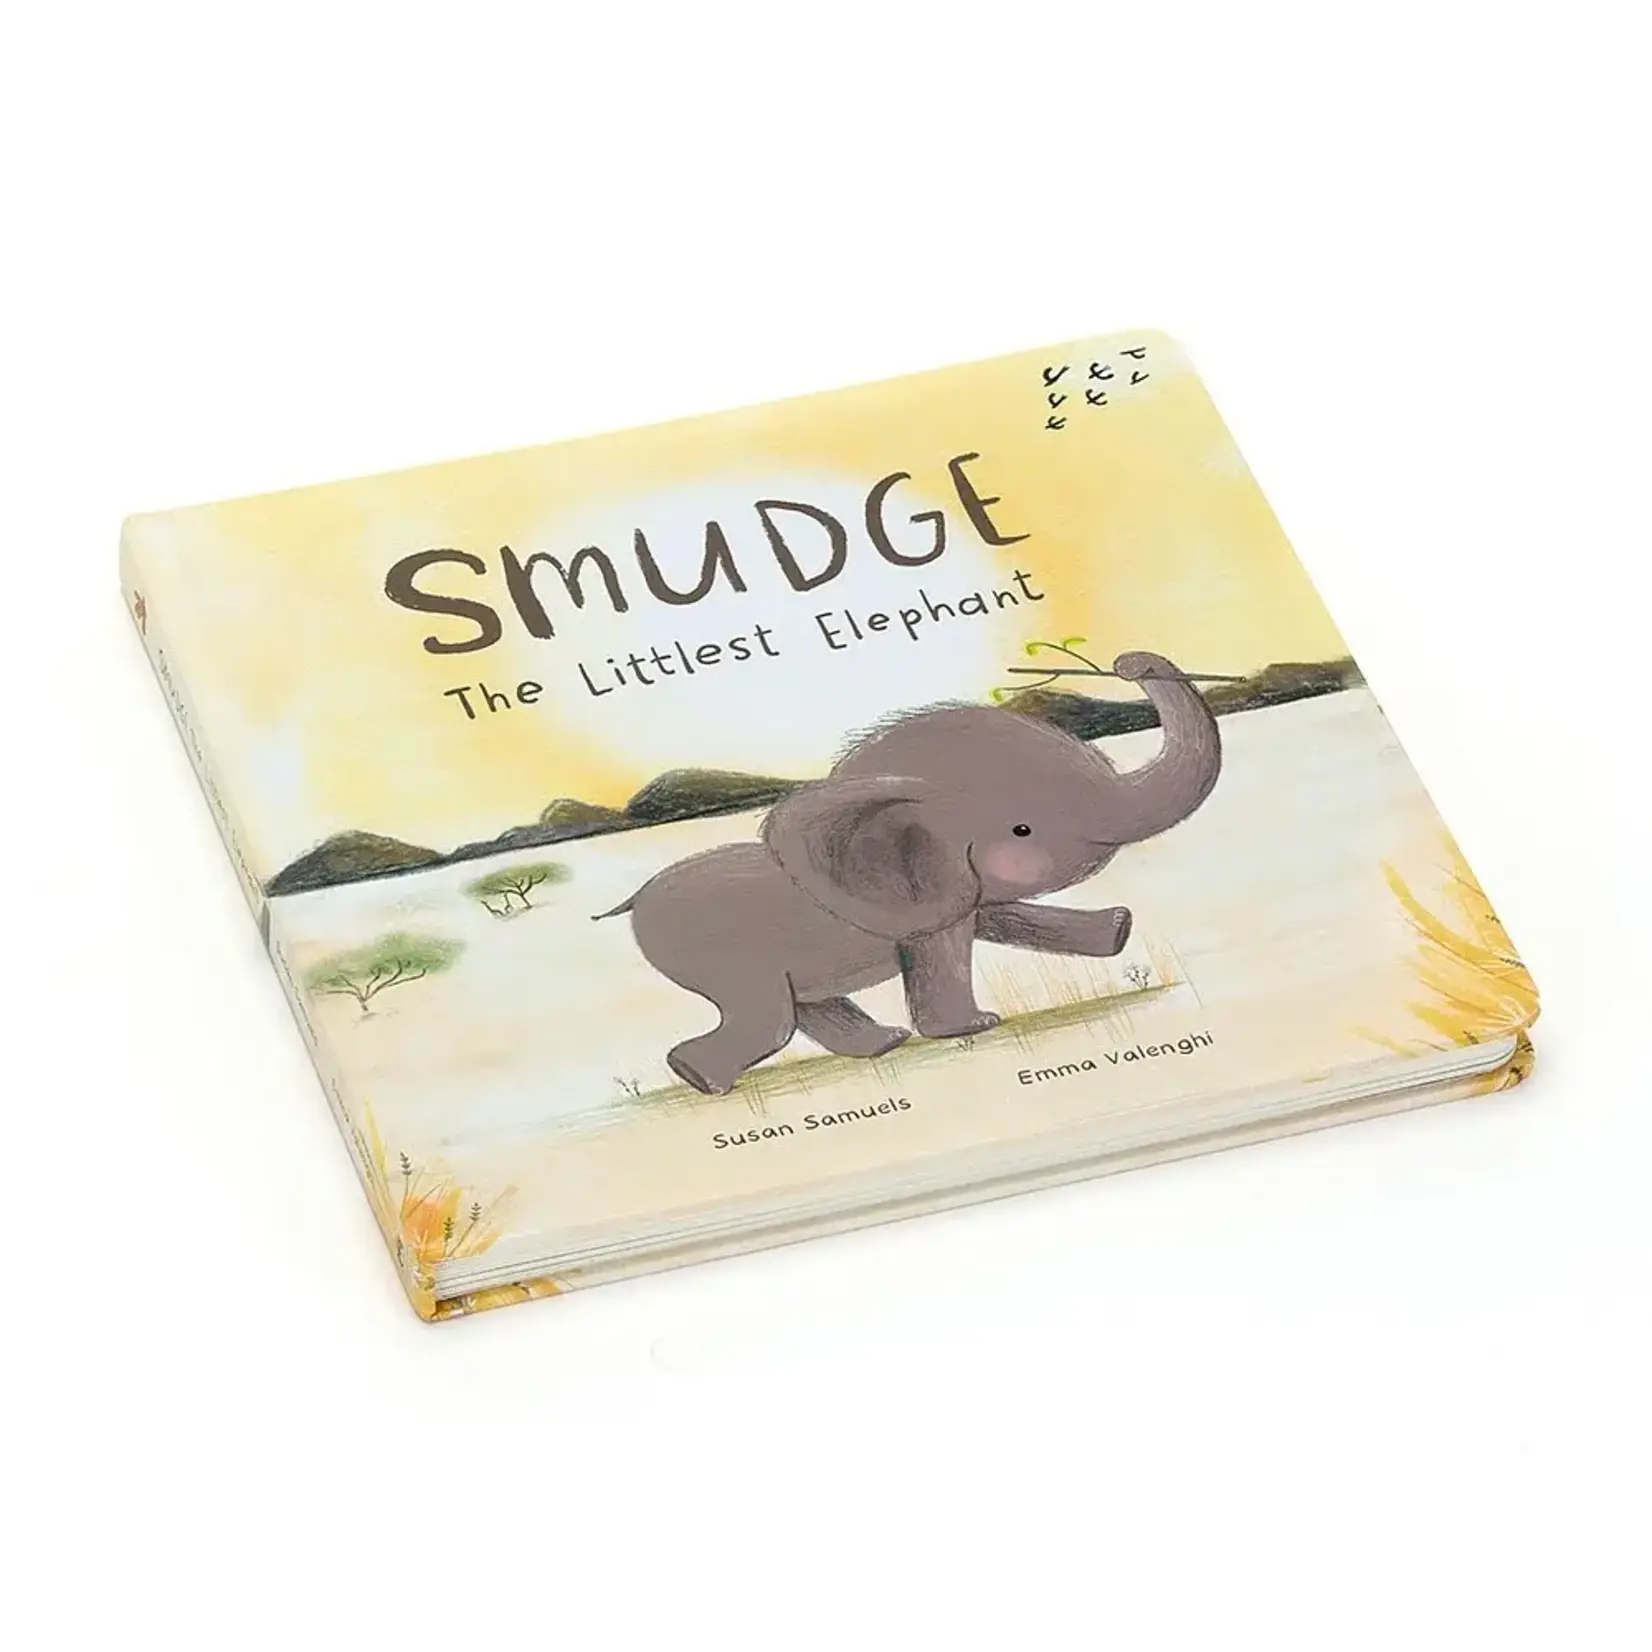 Jellycat Jellycat Smudge the Littlest Elephant Book